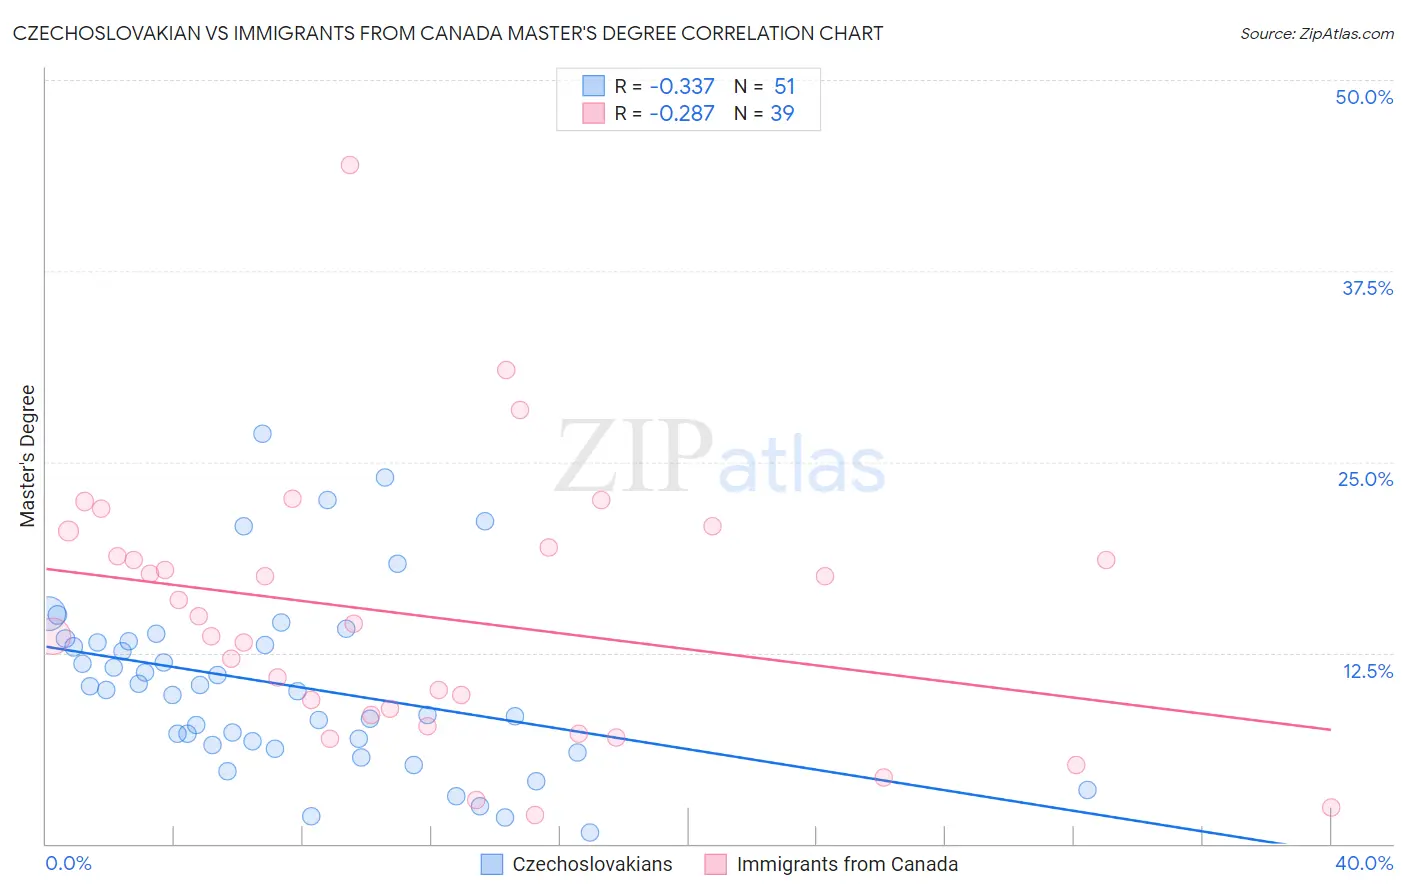 Czechoslovakian vs Immigrants from Canada Master's Degree